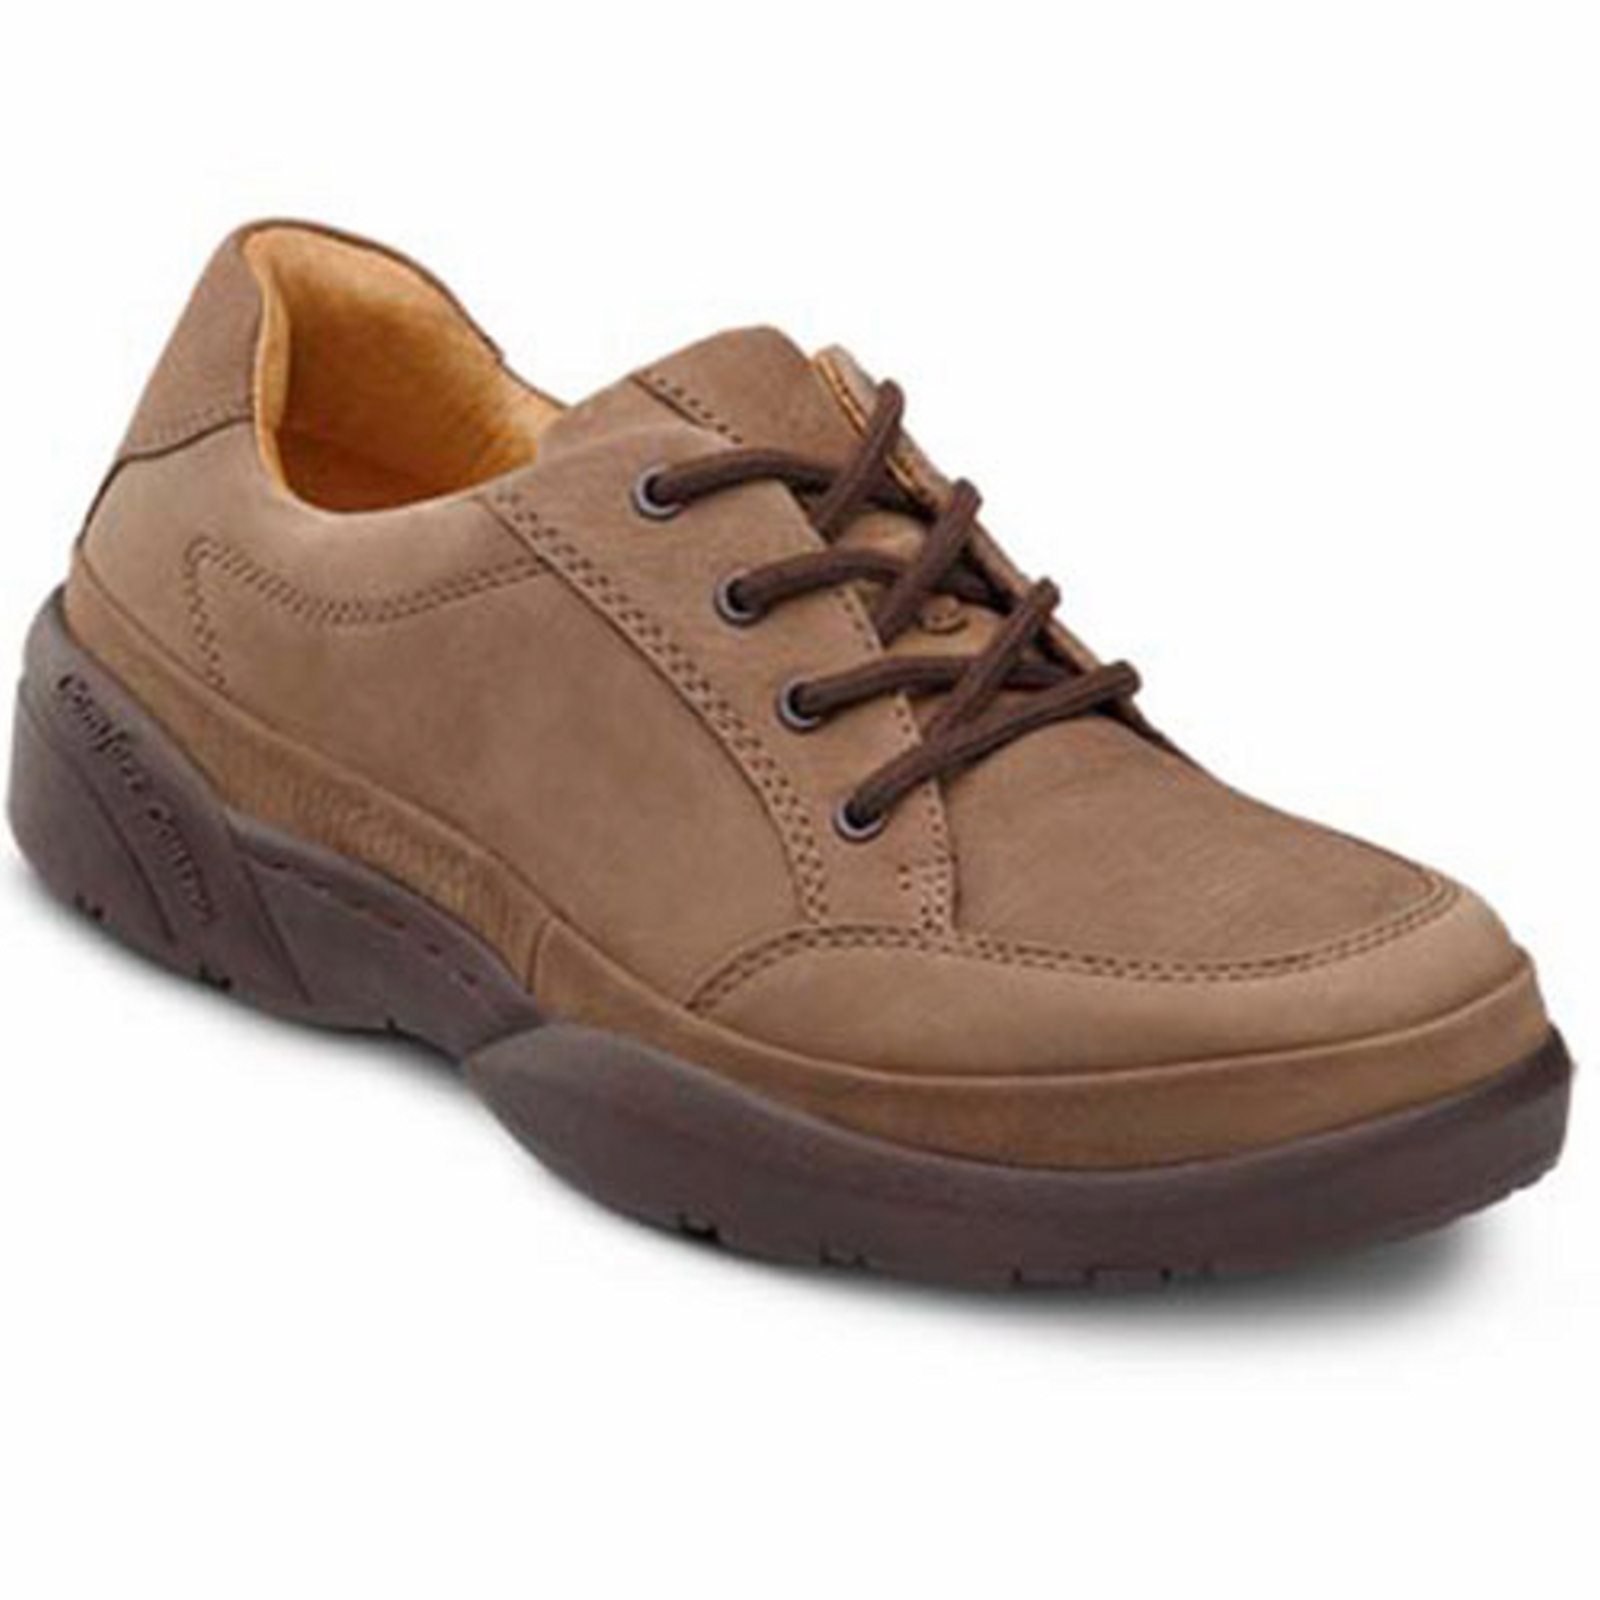 Dr. Comfort Justin Men's Casual Shoe: 9.5 Wide (E/2E) Chestnut Suede Lace - image 1 of 4